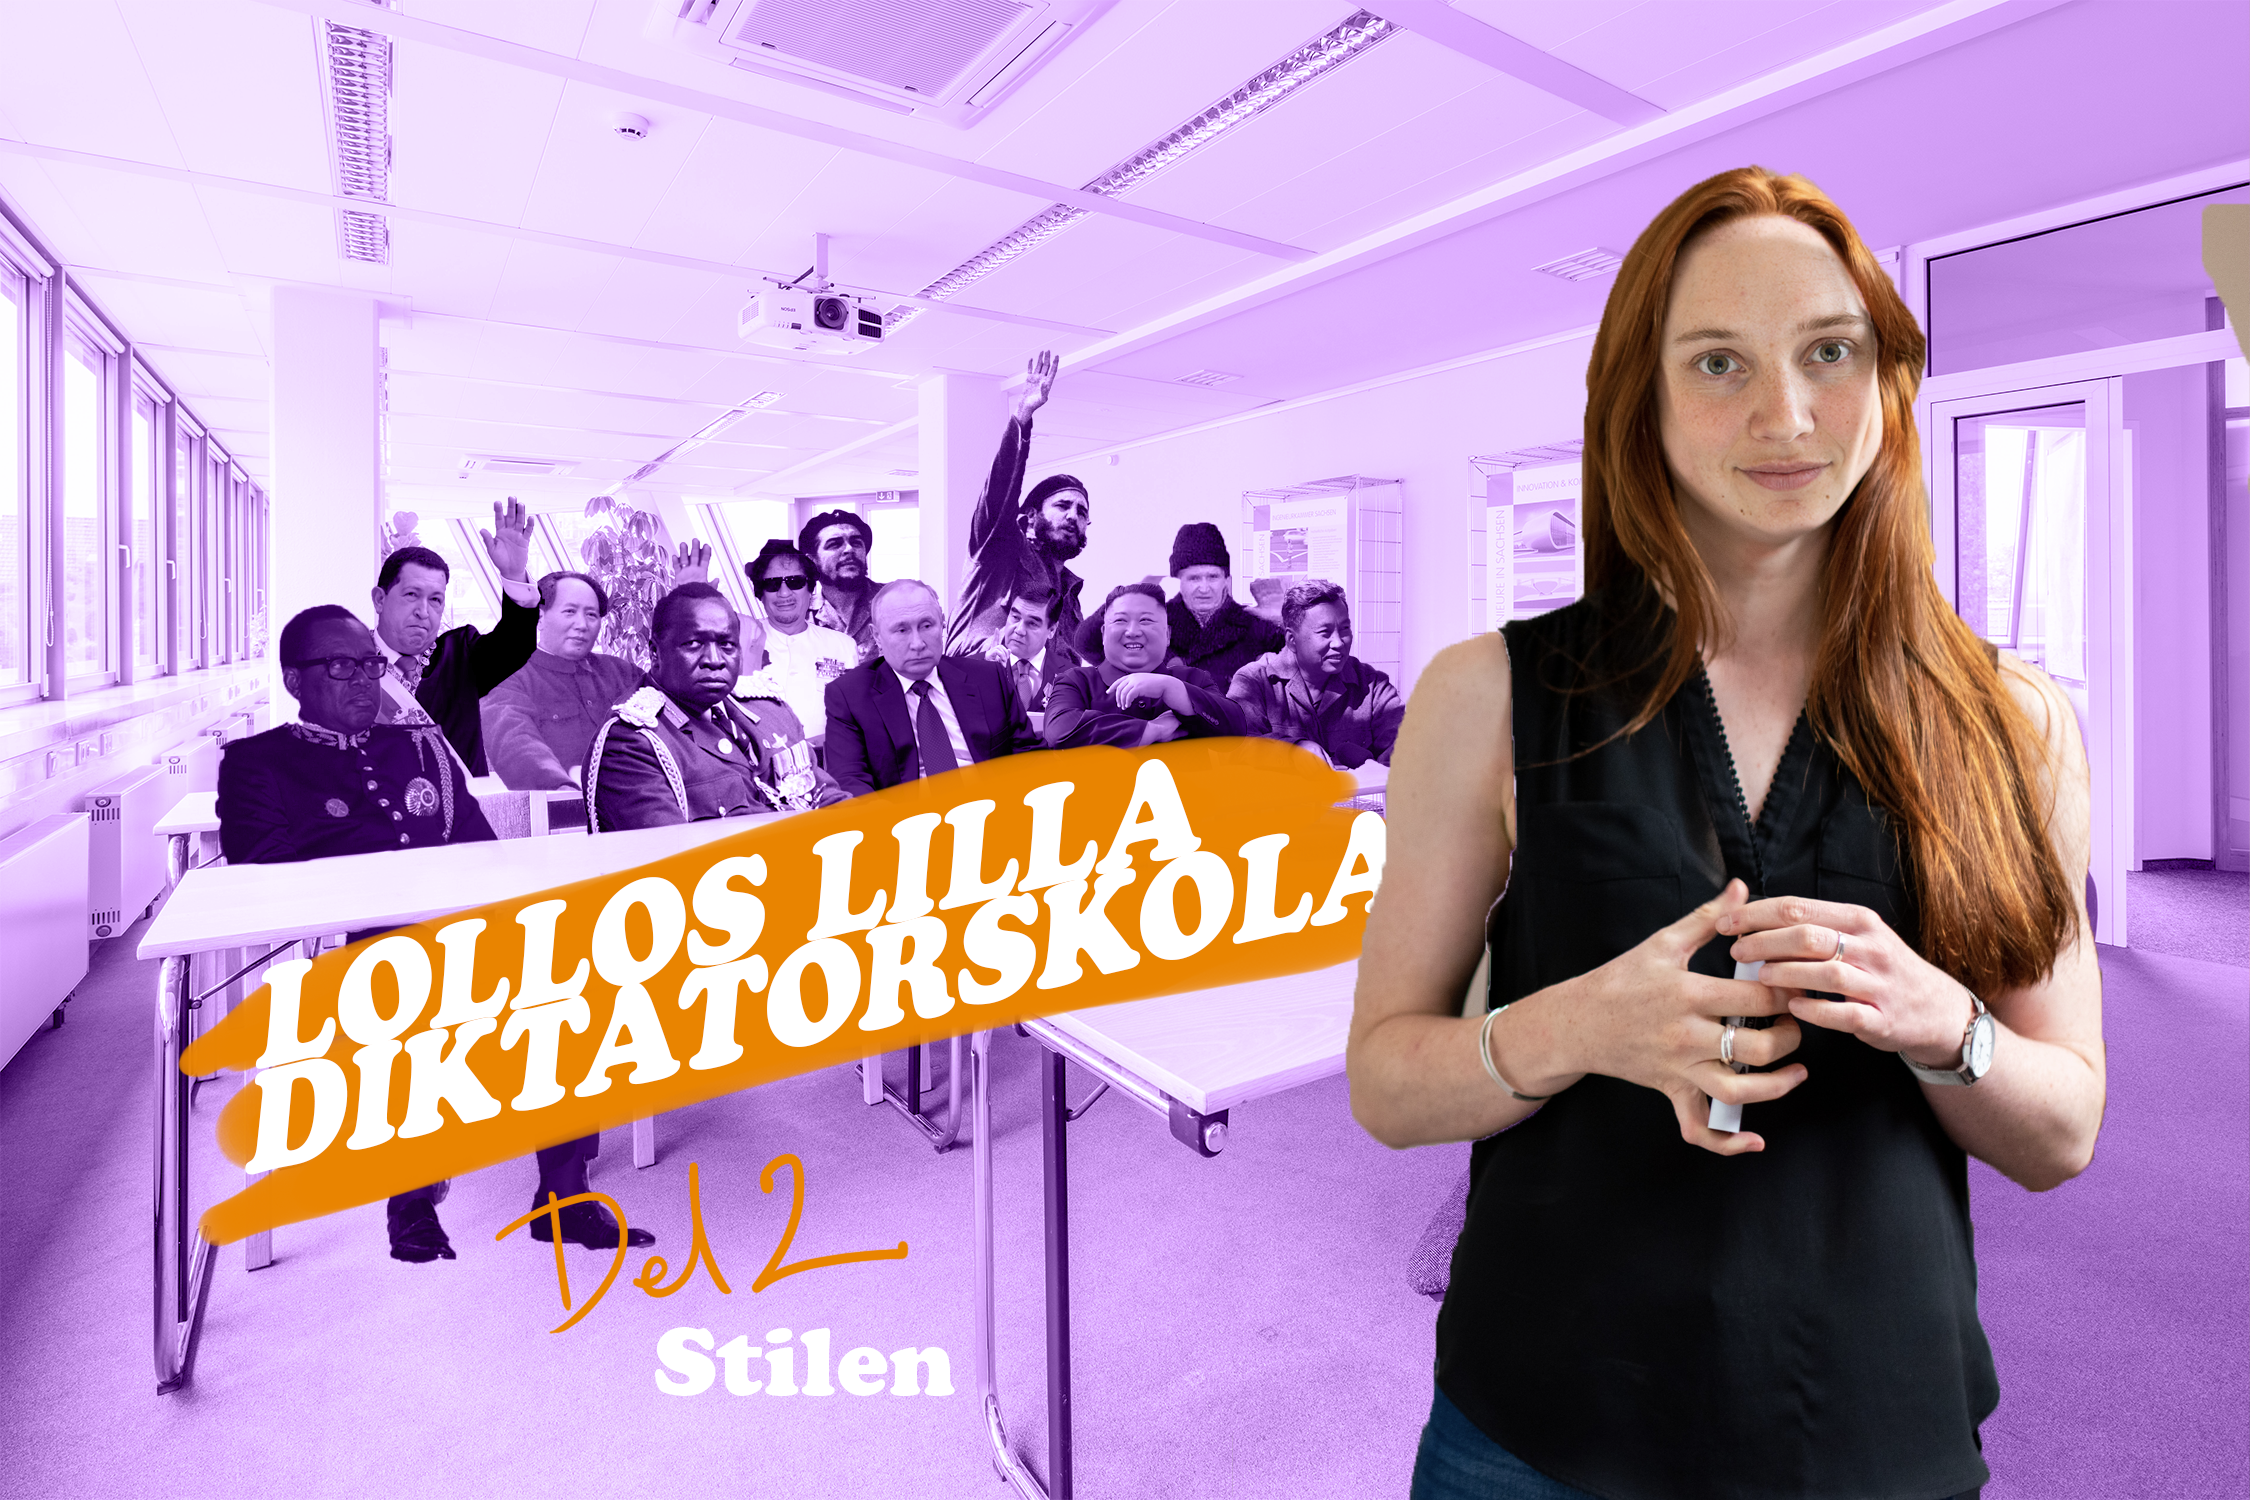 Lollos Lilla Diktatorskola – Del 2c: Hitta Stilen "Own It"